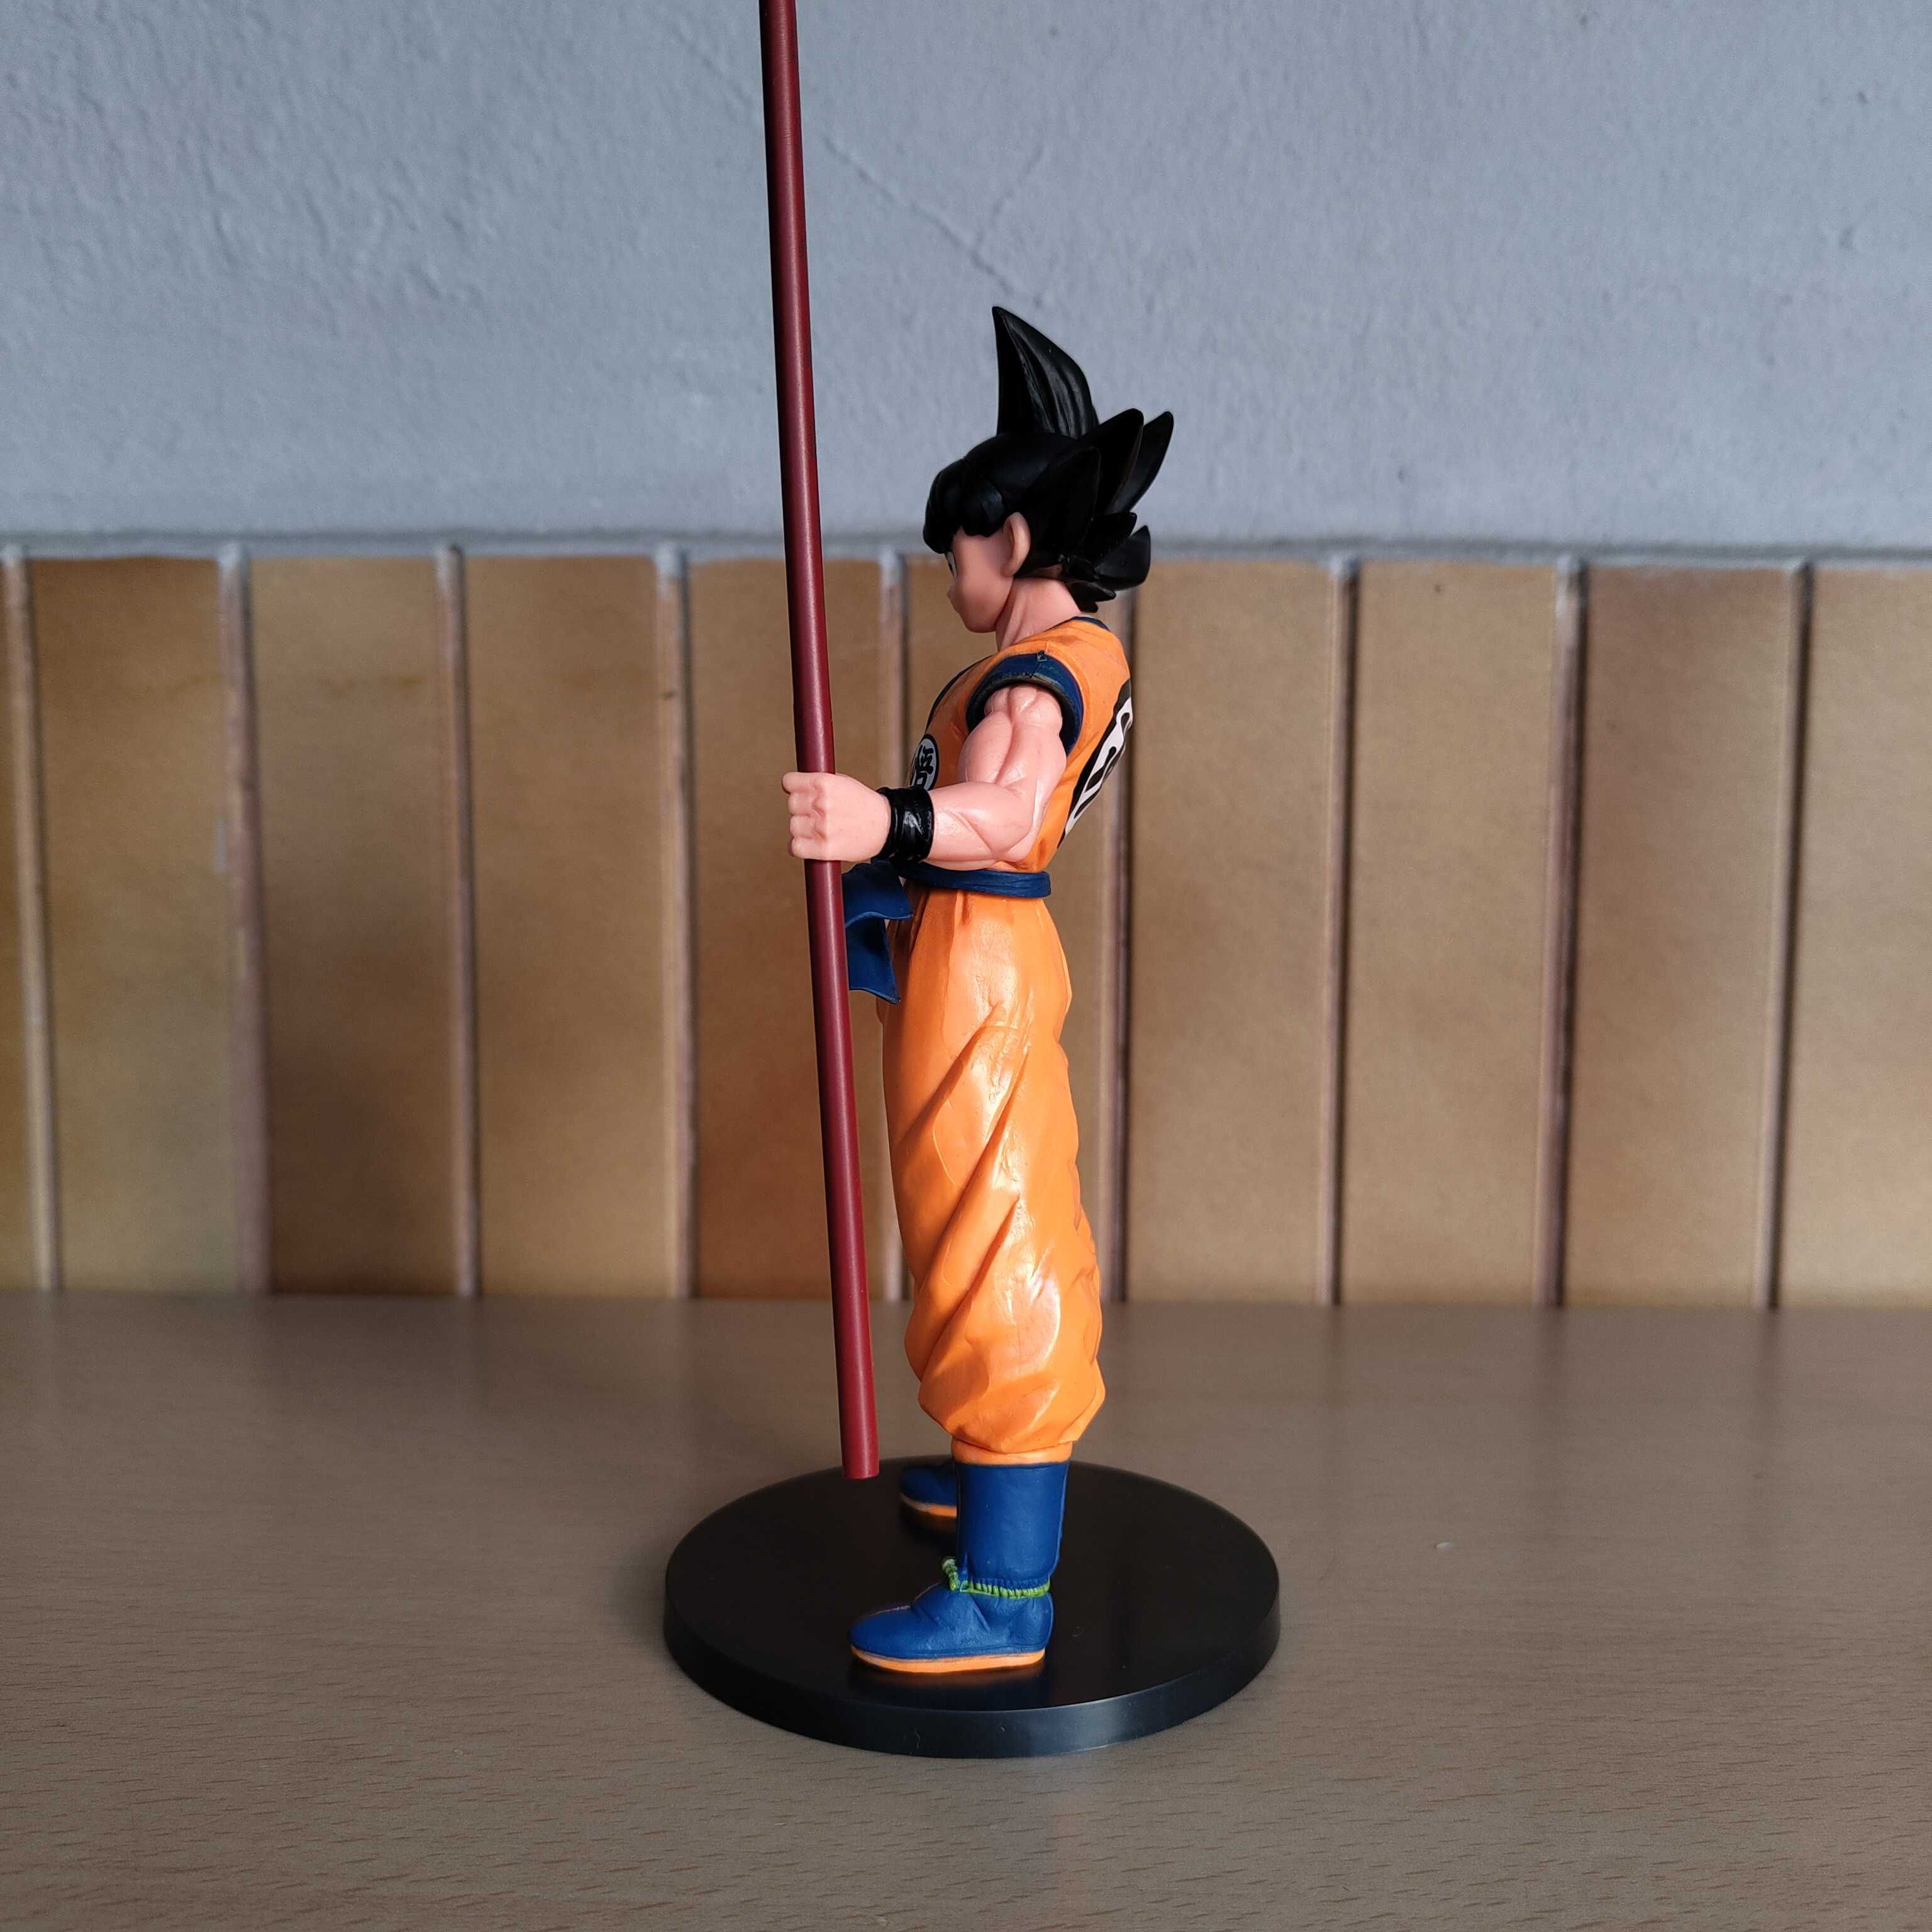 Boneco Figura Son Goku Dragon Ball